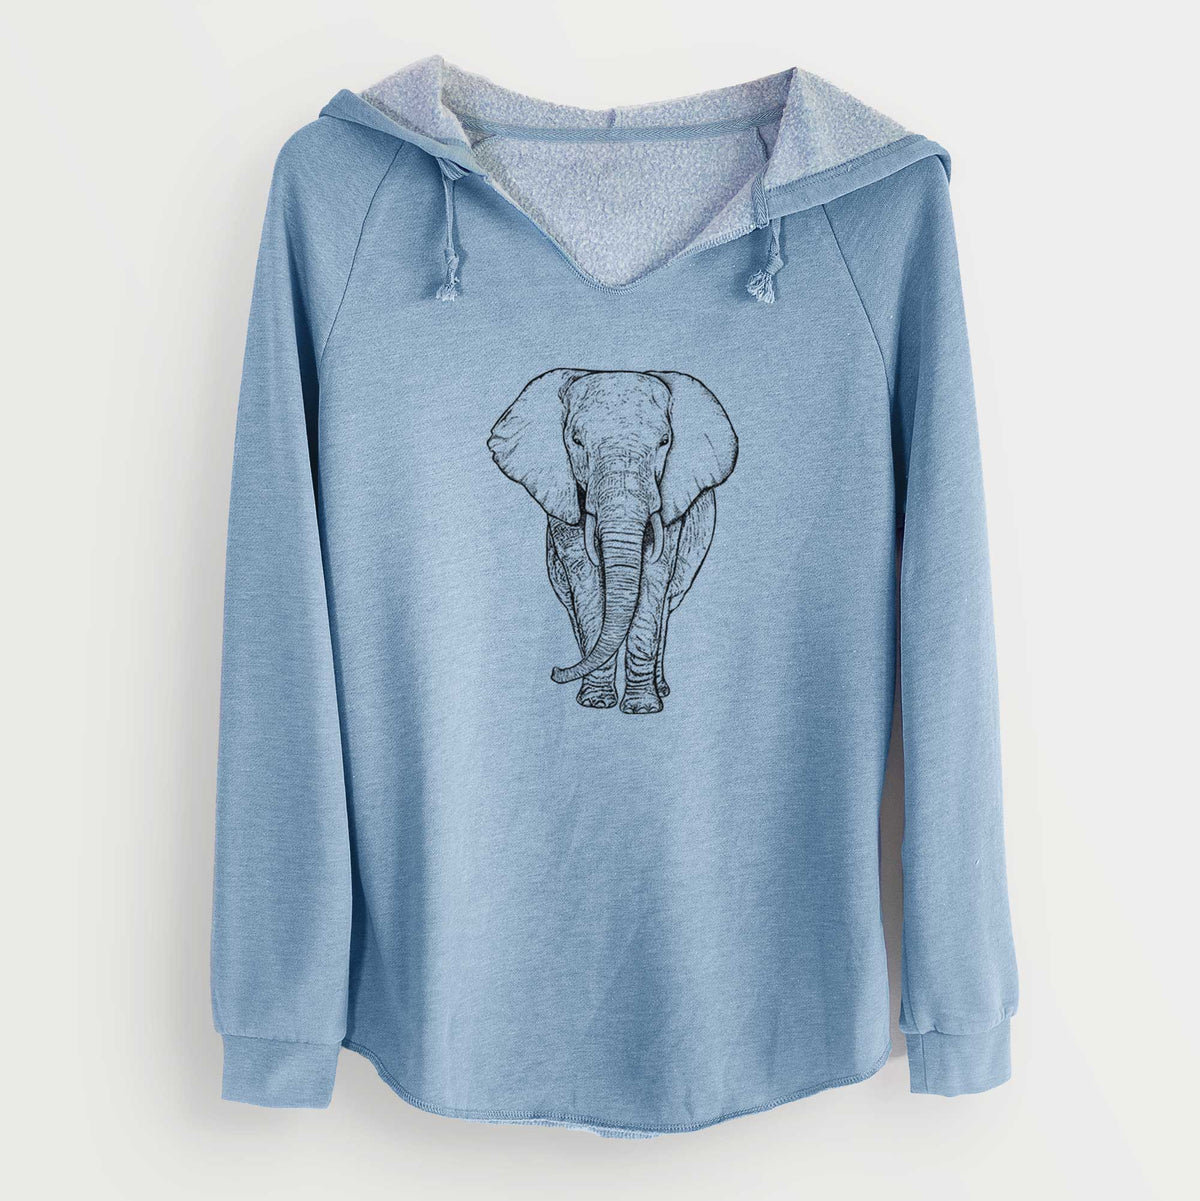 Loxodonta africana - African Elephant - Cali Wave Hooded Sweatshirt